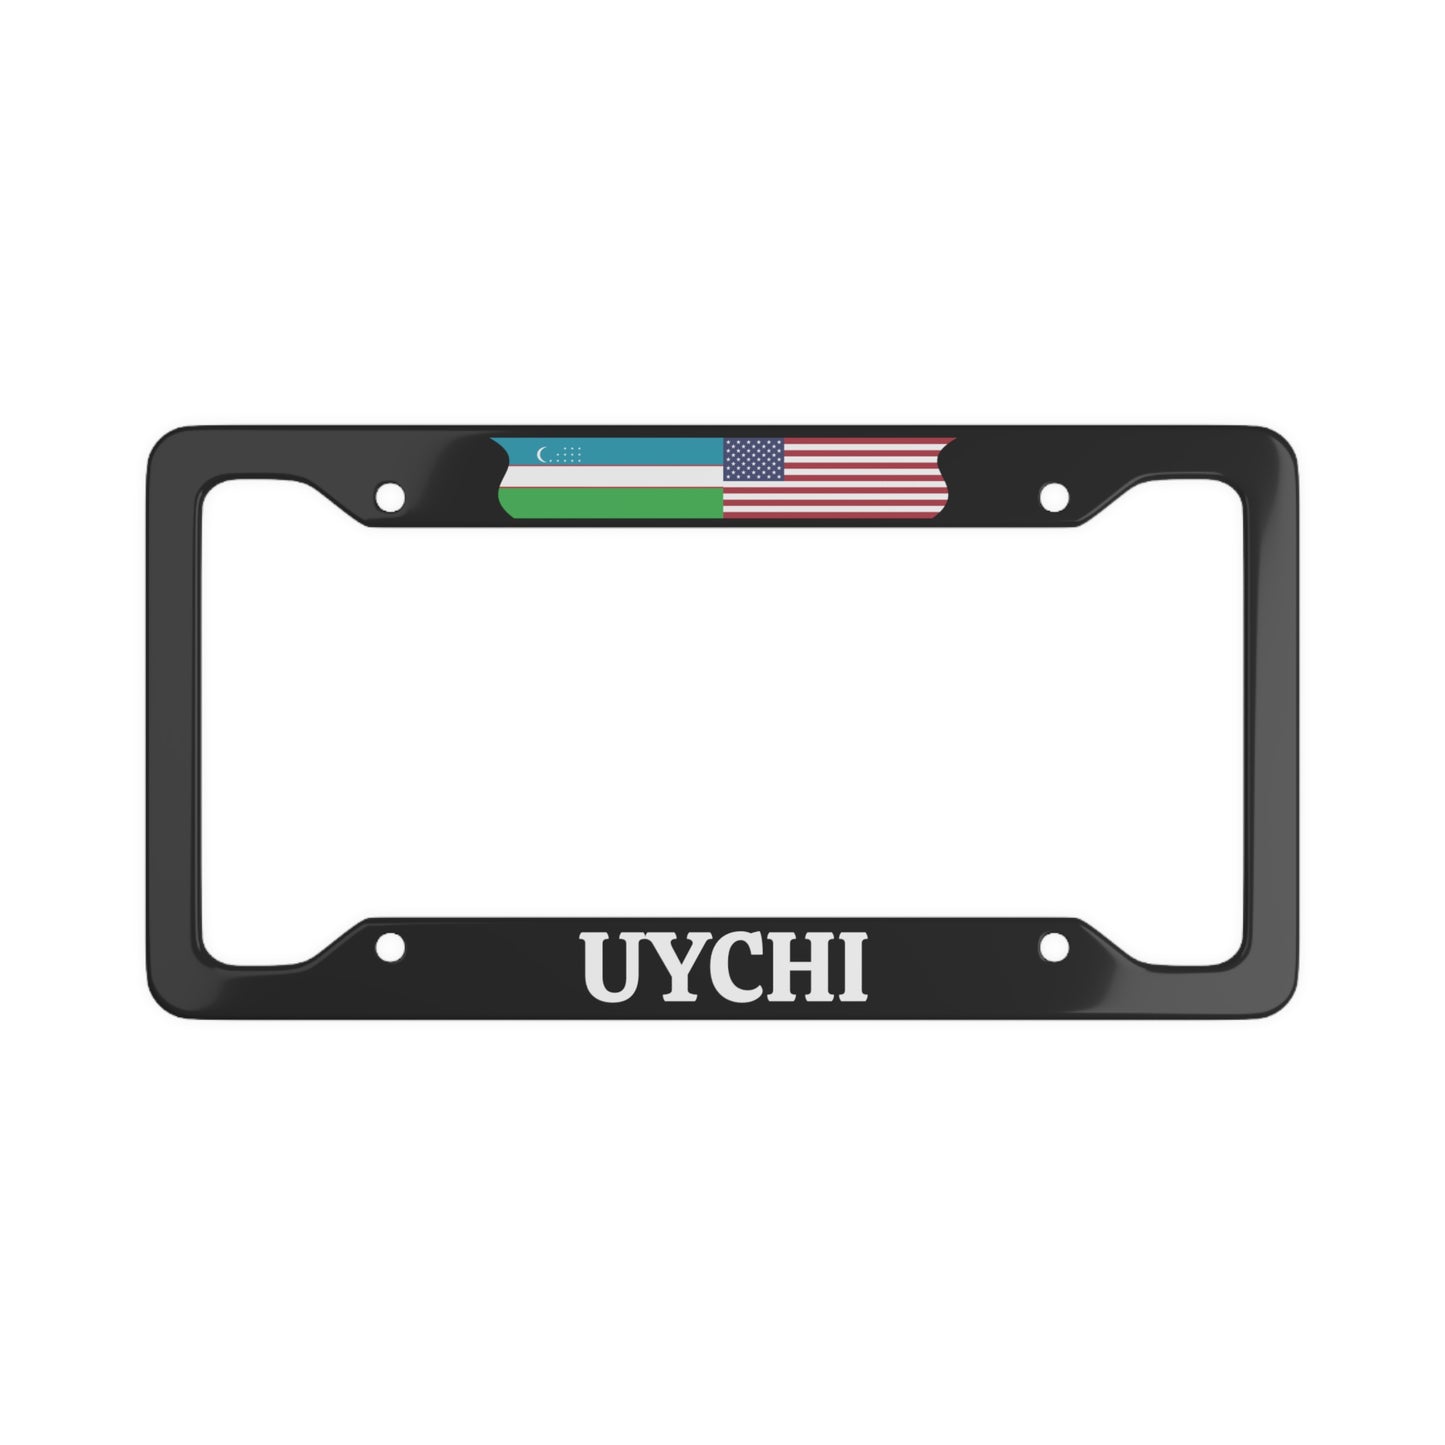 Uychi License Plate Frame